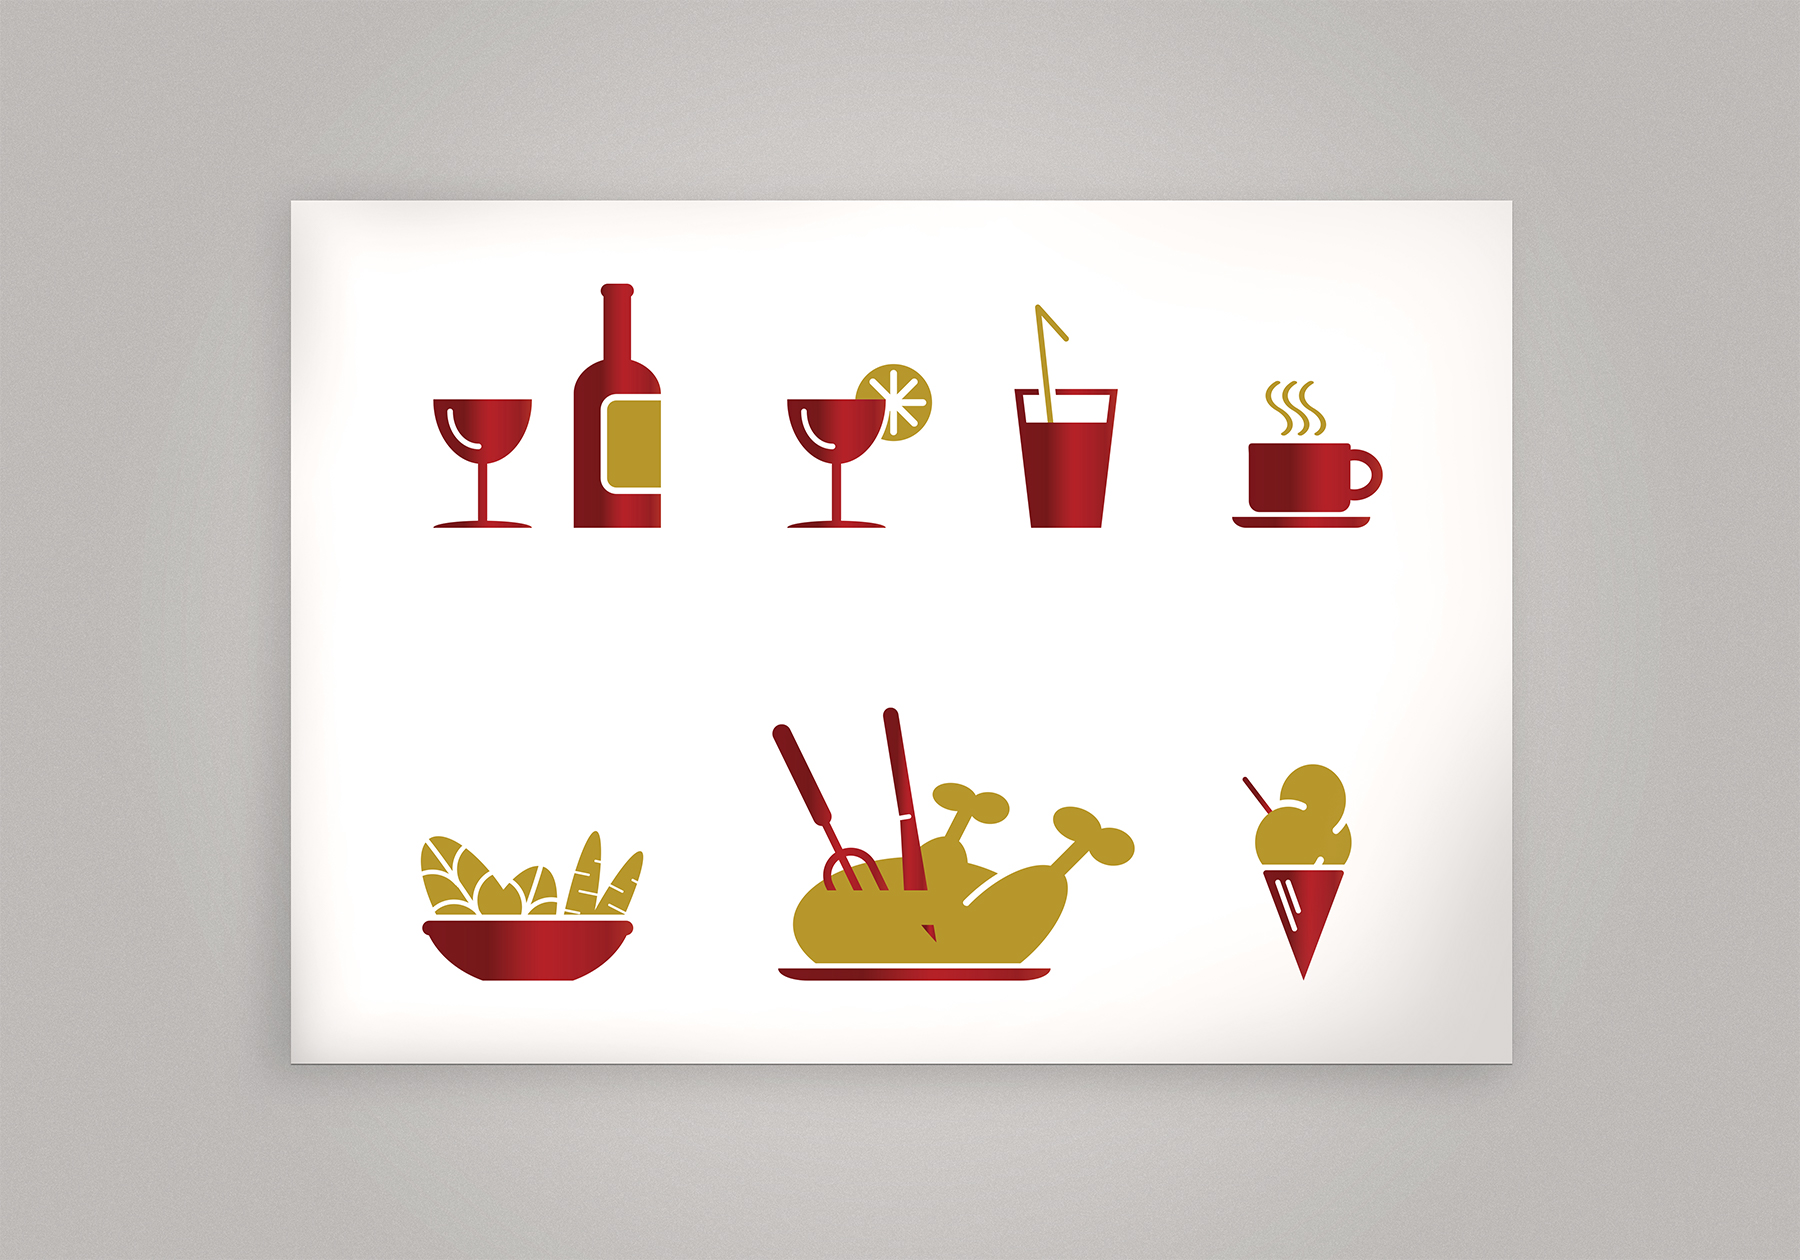 qda design portfolio: referenz food icons adobe illustrator cc